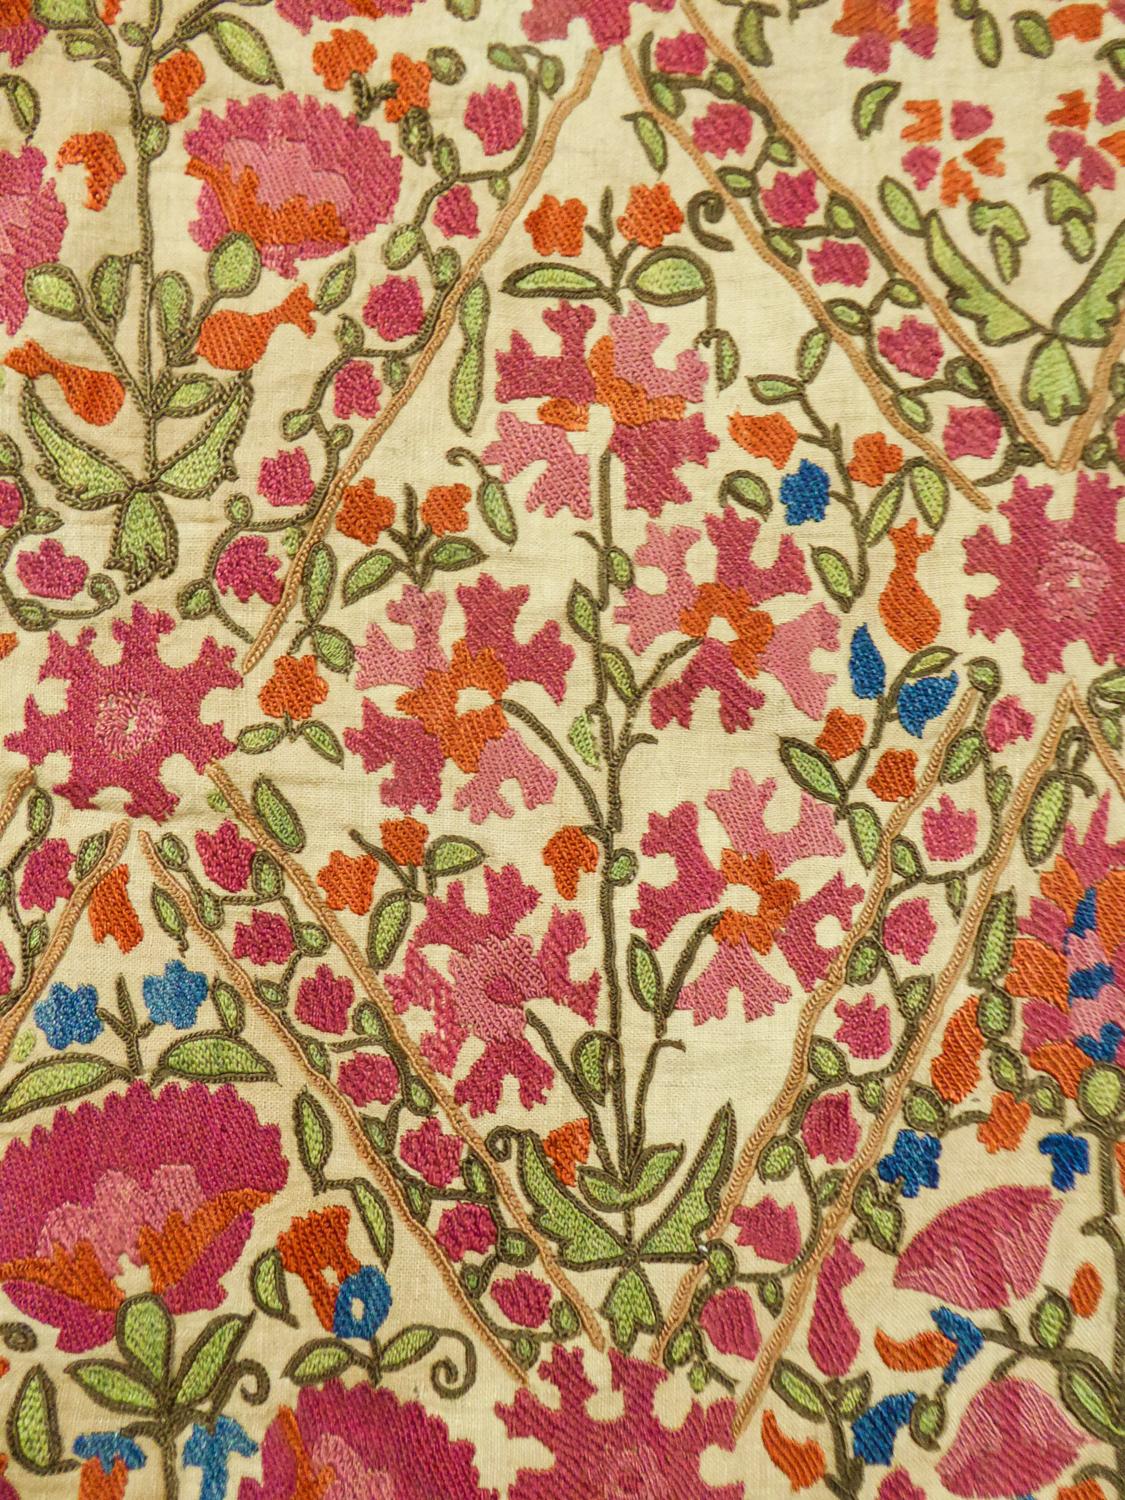 Suzani or Paradise’s Garden Embroidered with Silk - Uzbekistan late 19th Century 2